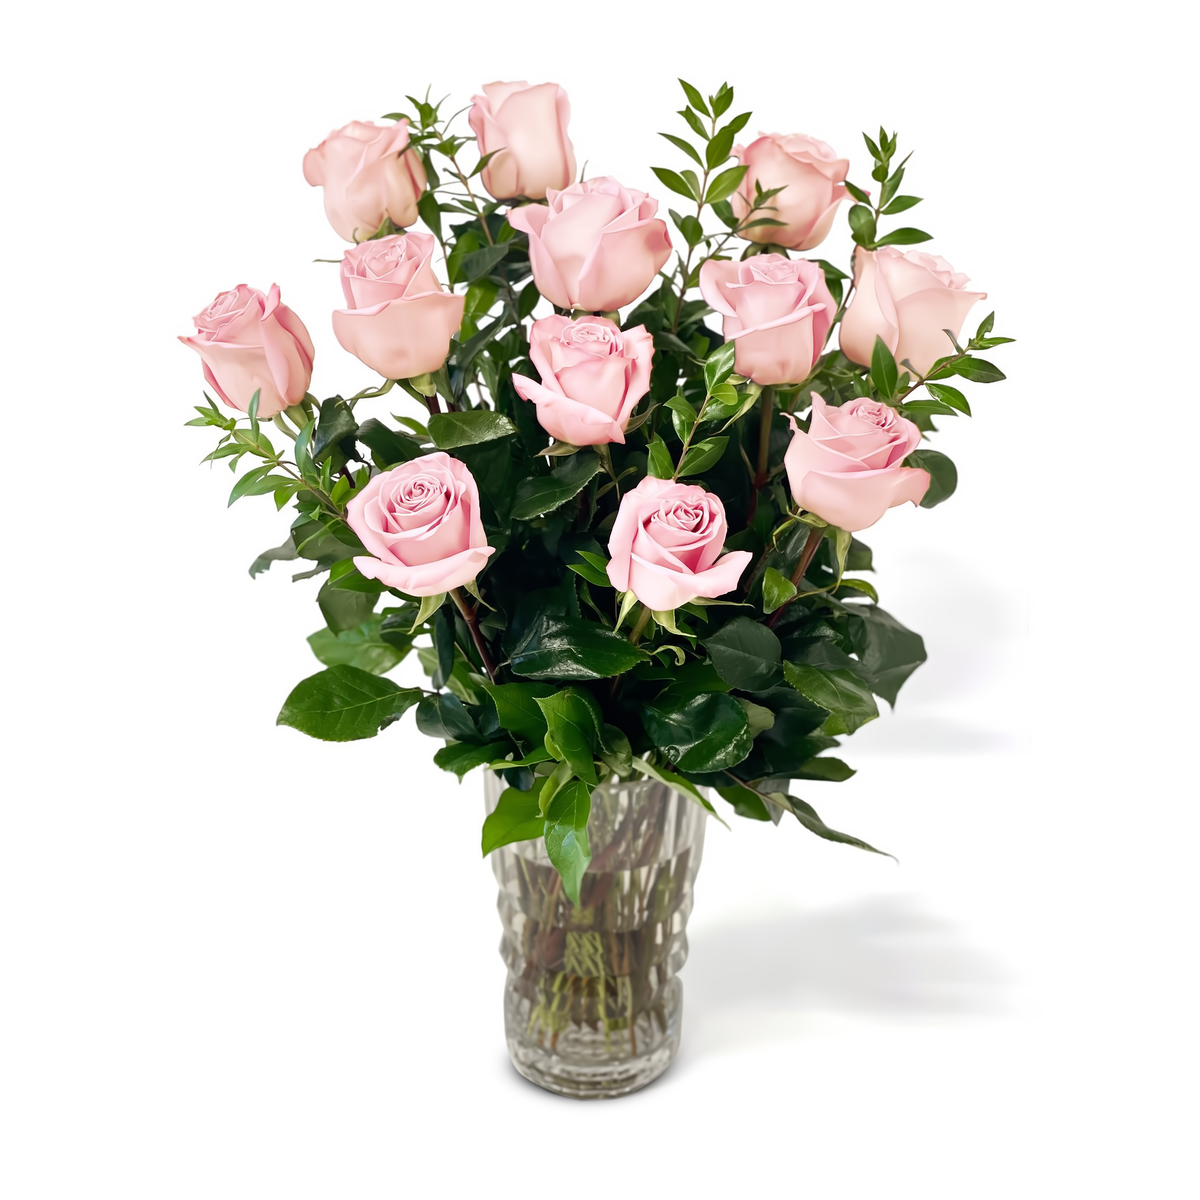 Queens Flower Delivery - Fresh Roses in a Crystal Vase | Dozen Light Pink